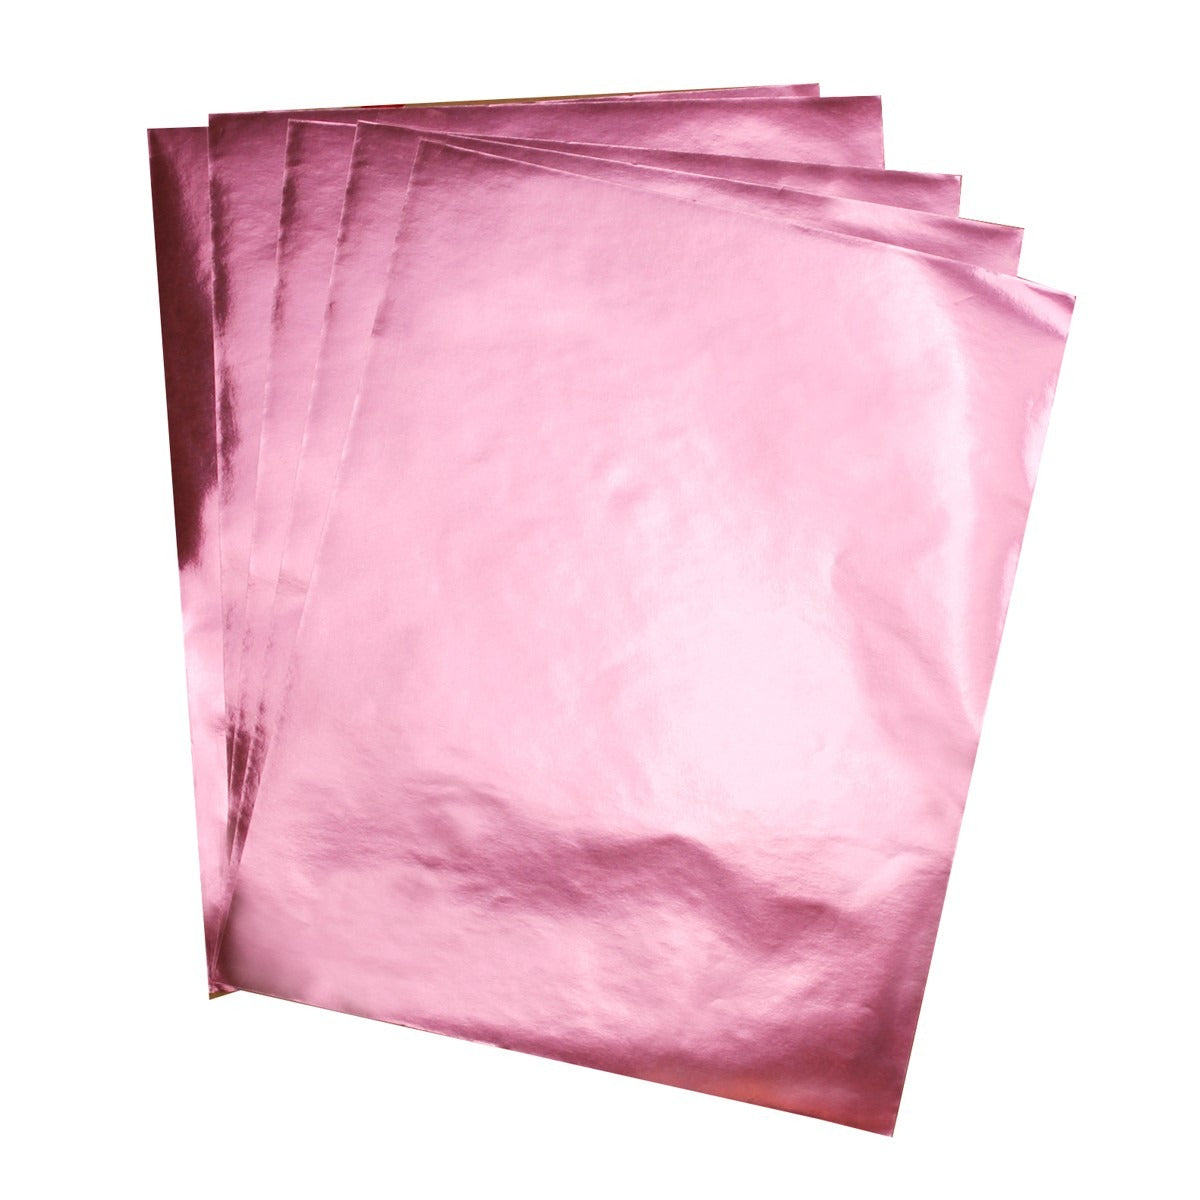 Metallic Foil Paper 12 Sheets 8.5 x 11 Pink – King Stationary Inc